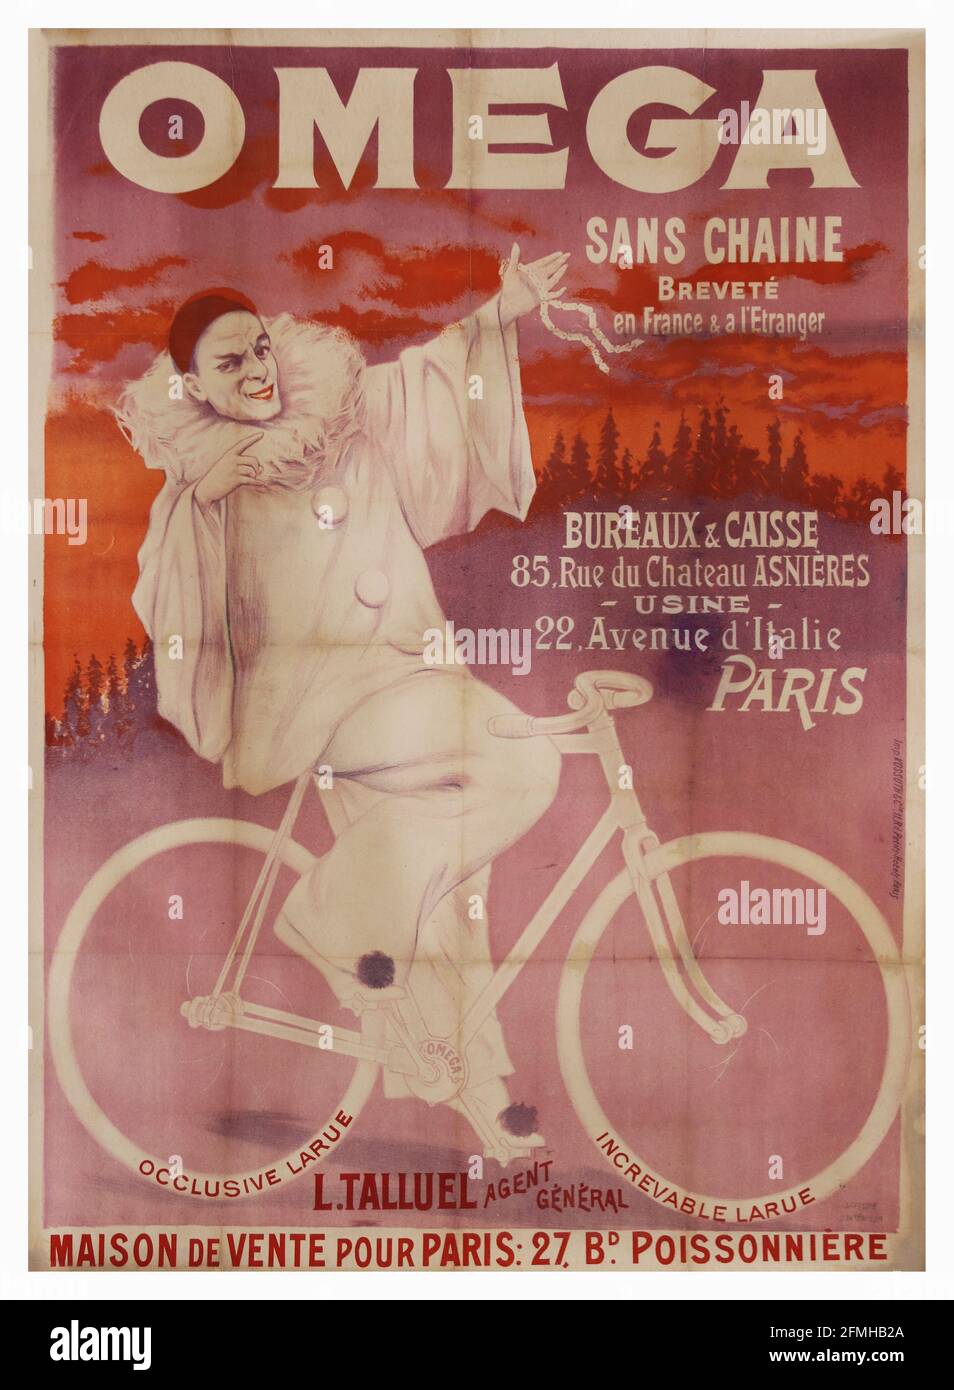 Omega – Sans Chaine. Bureaux & Caisse. 22 Avenue d'Italie Paris. Bicycle advertisement poster. Old and vintage. Digitally enhanced. Stock Photo